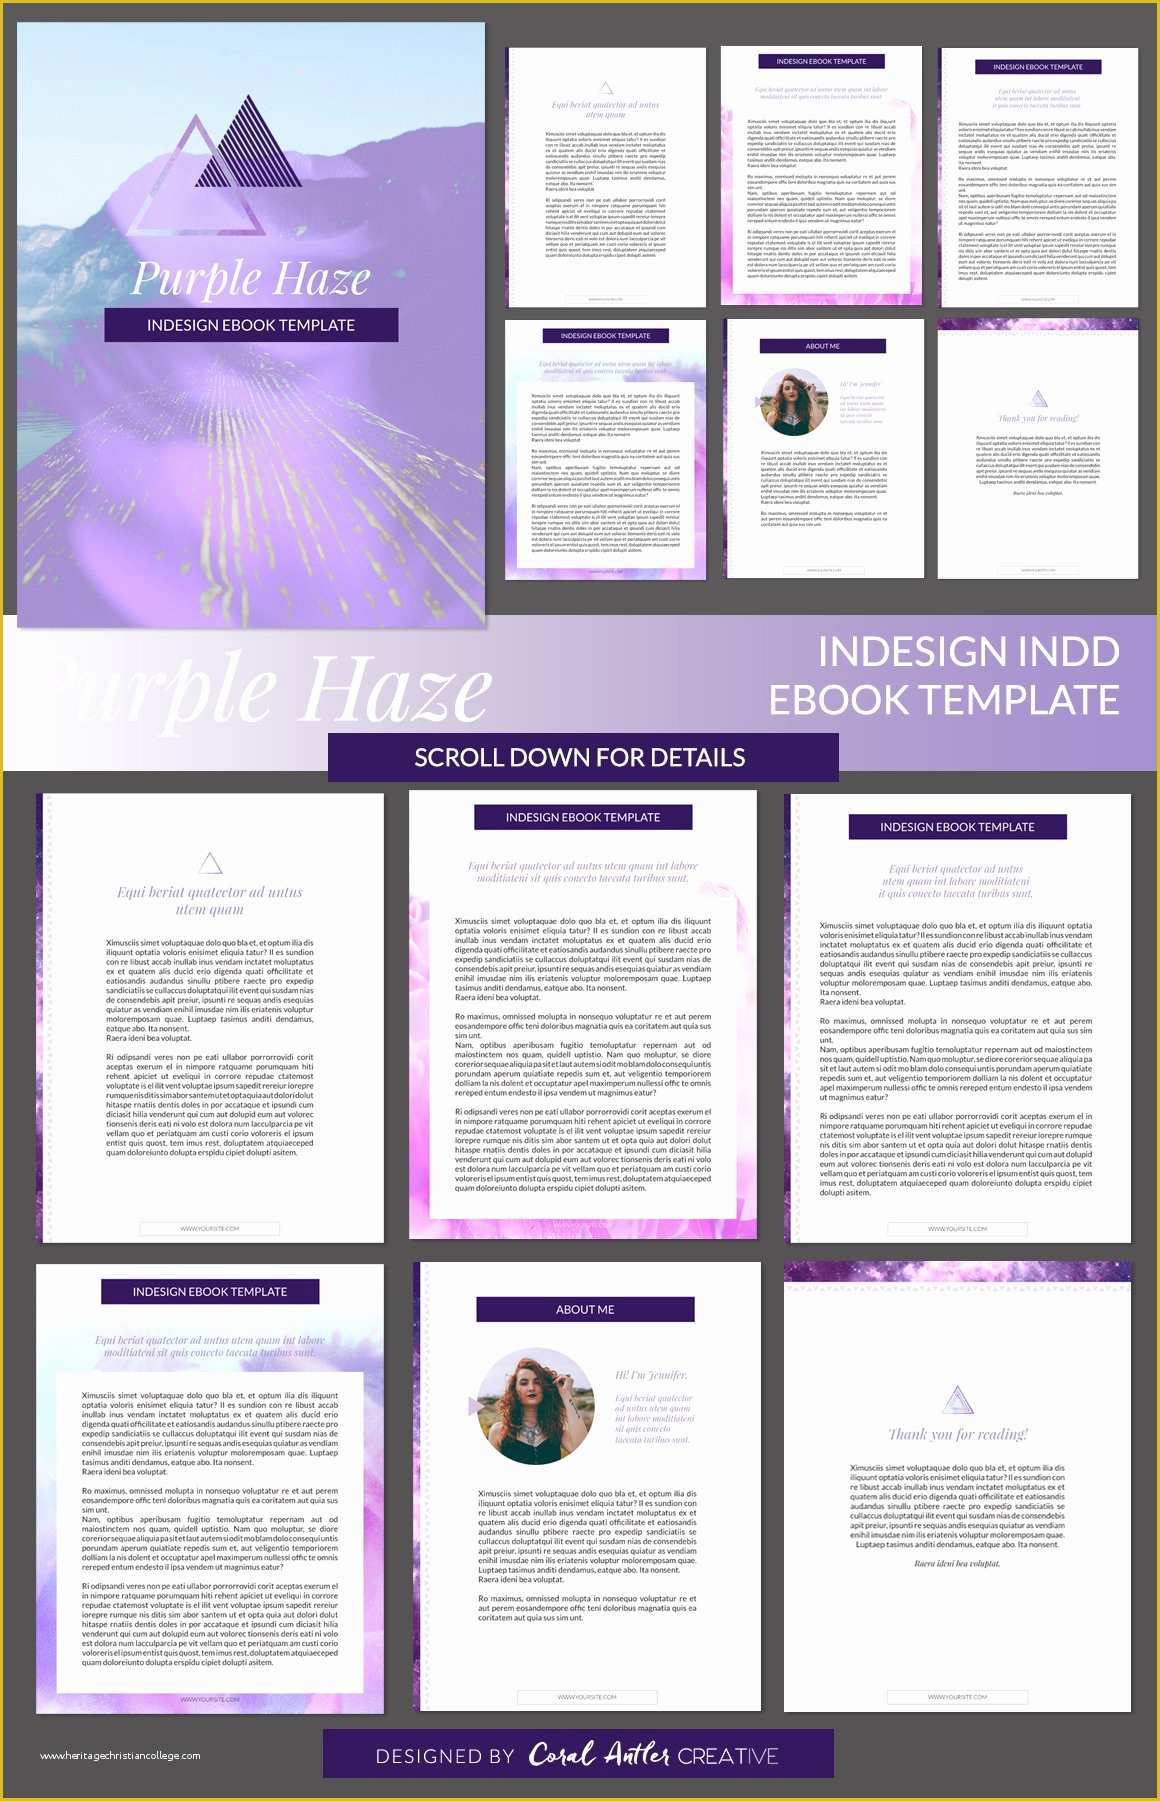 Presentation Indesign Template Free Of Purple Haze Indesign Ebook Template Presentation